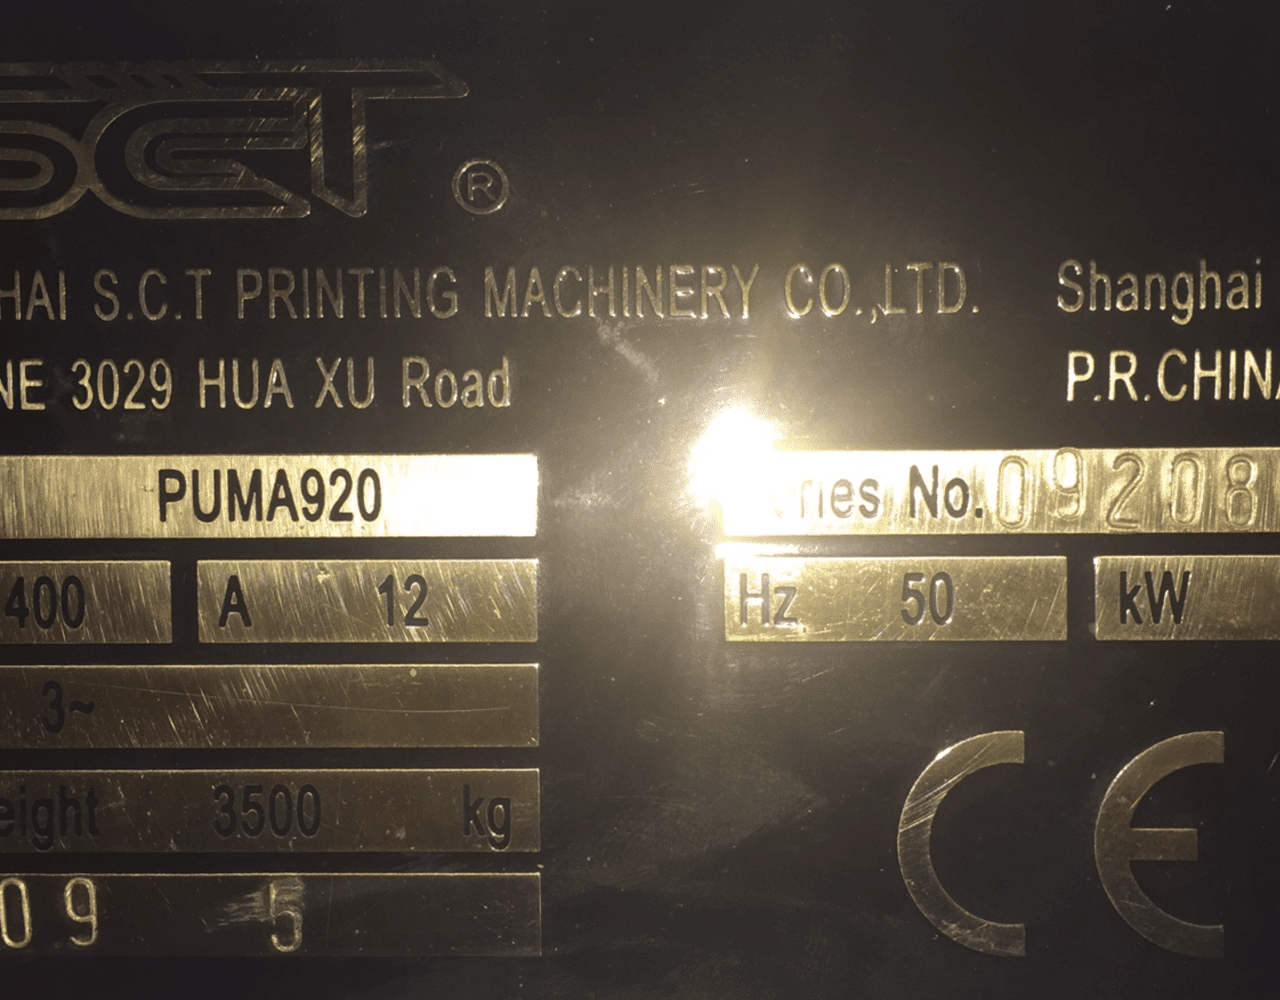 puma920-3